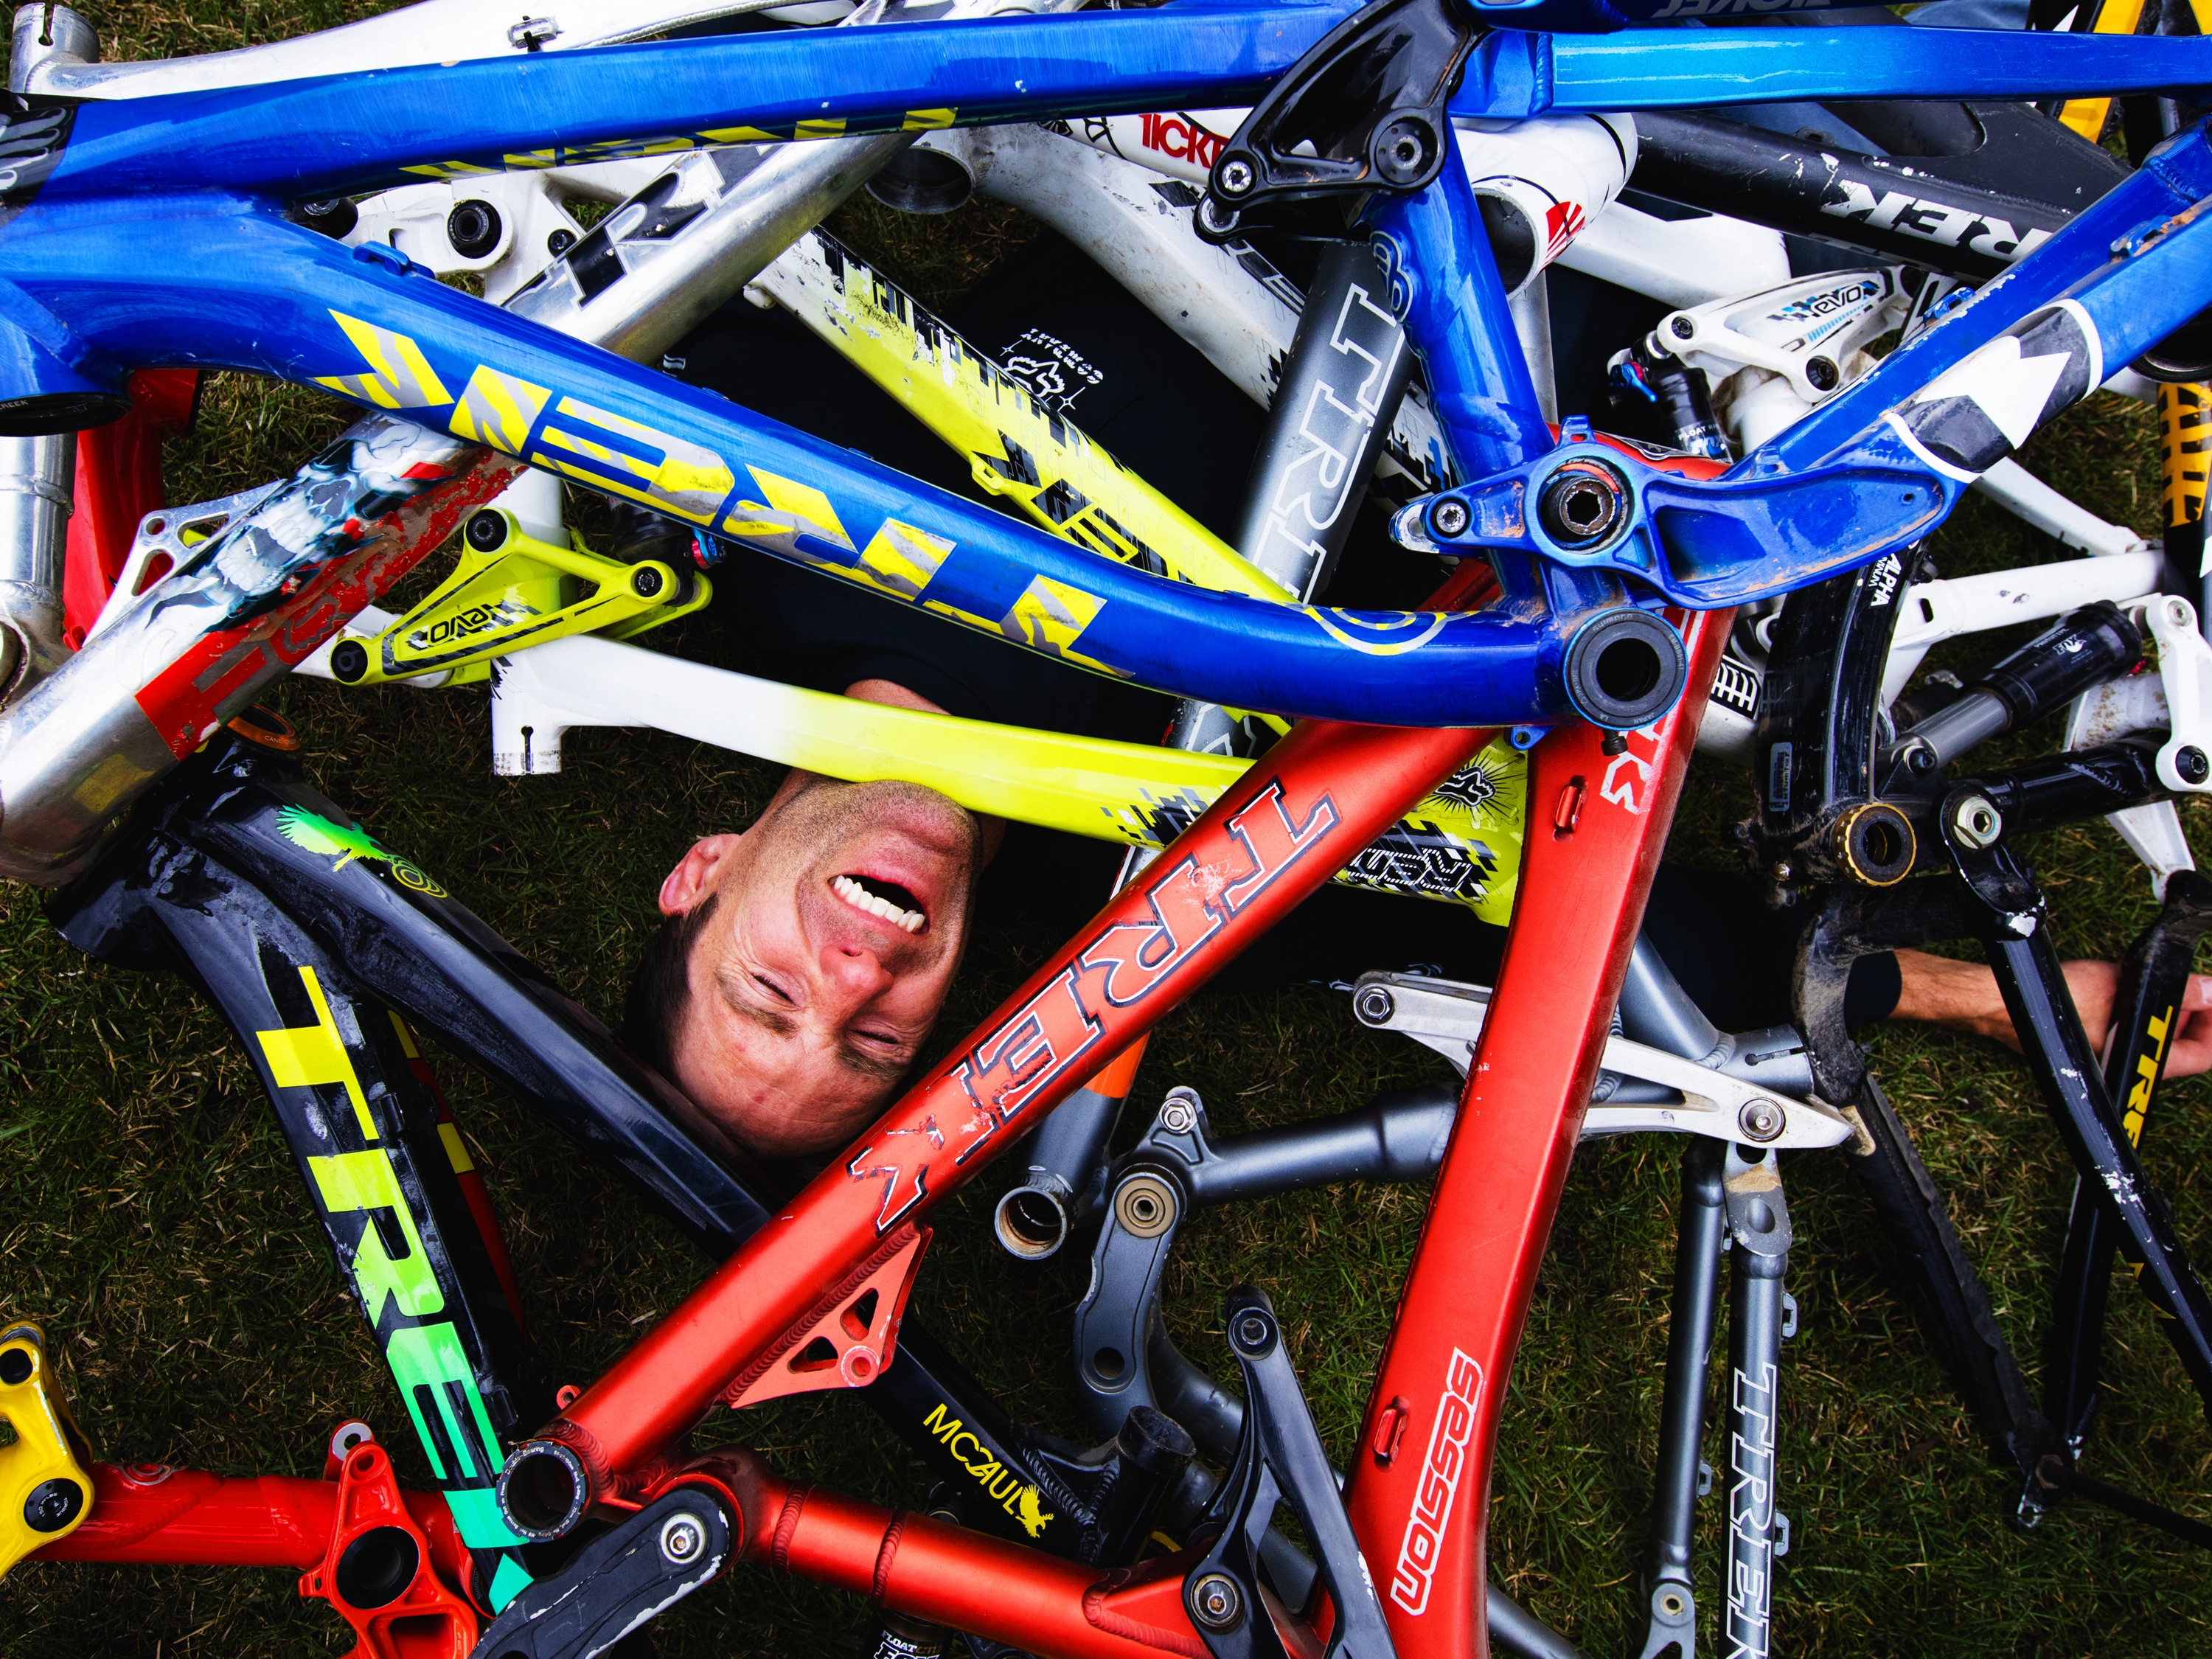 Trek Bikes - The worldu0027s best bikes and cycling gear  Trek Bikes